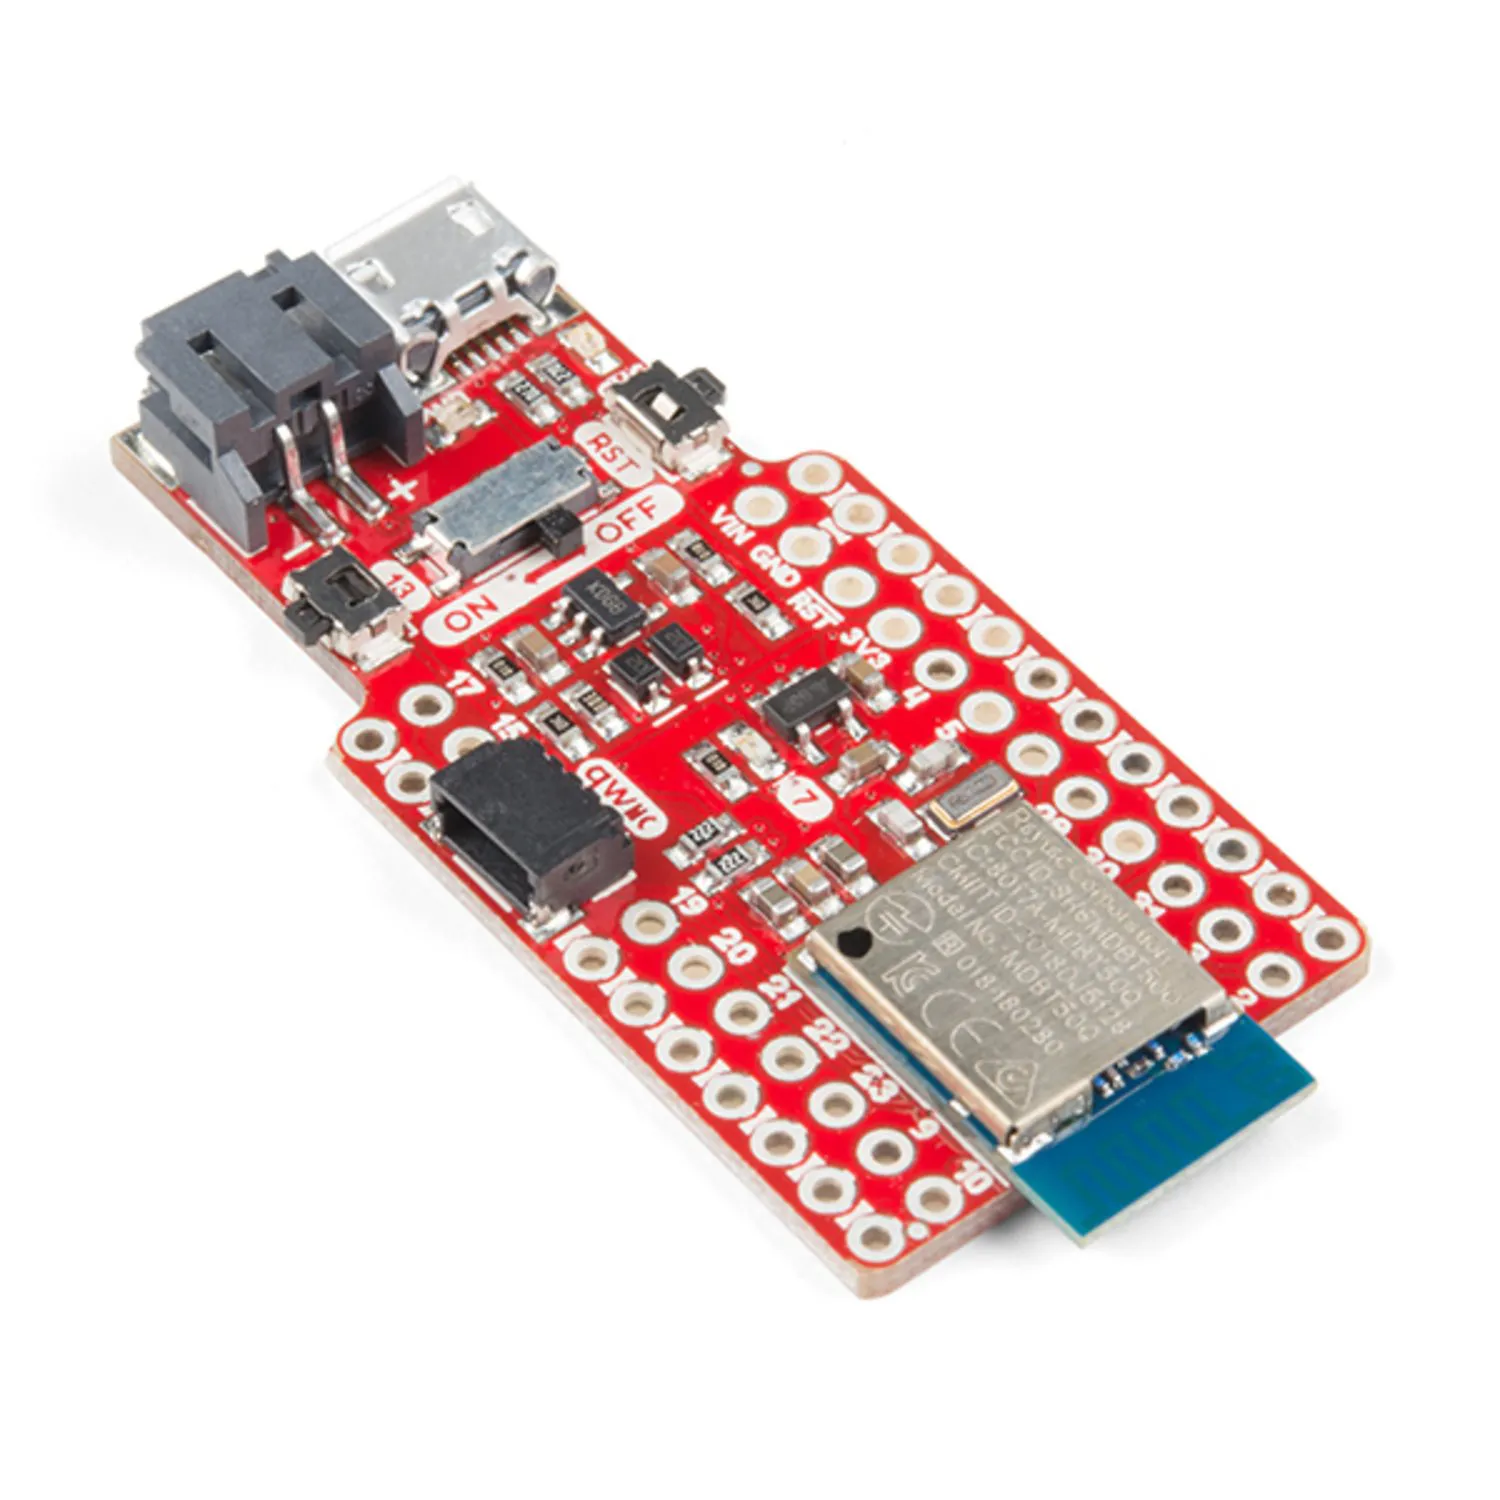 Photo of SparkFun Pro nRF52840 Mini - Bluetooth Development Board